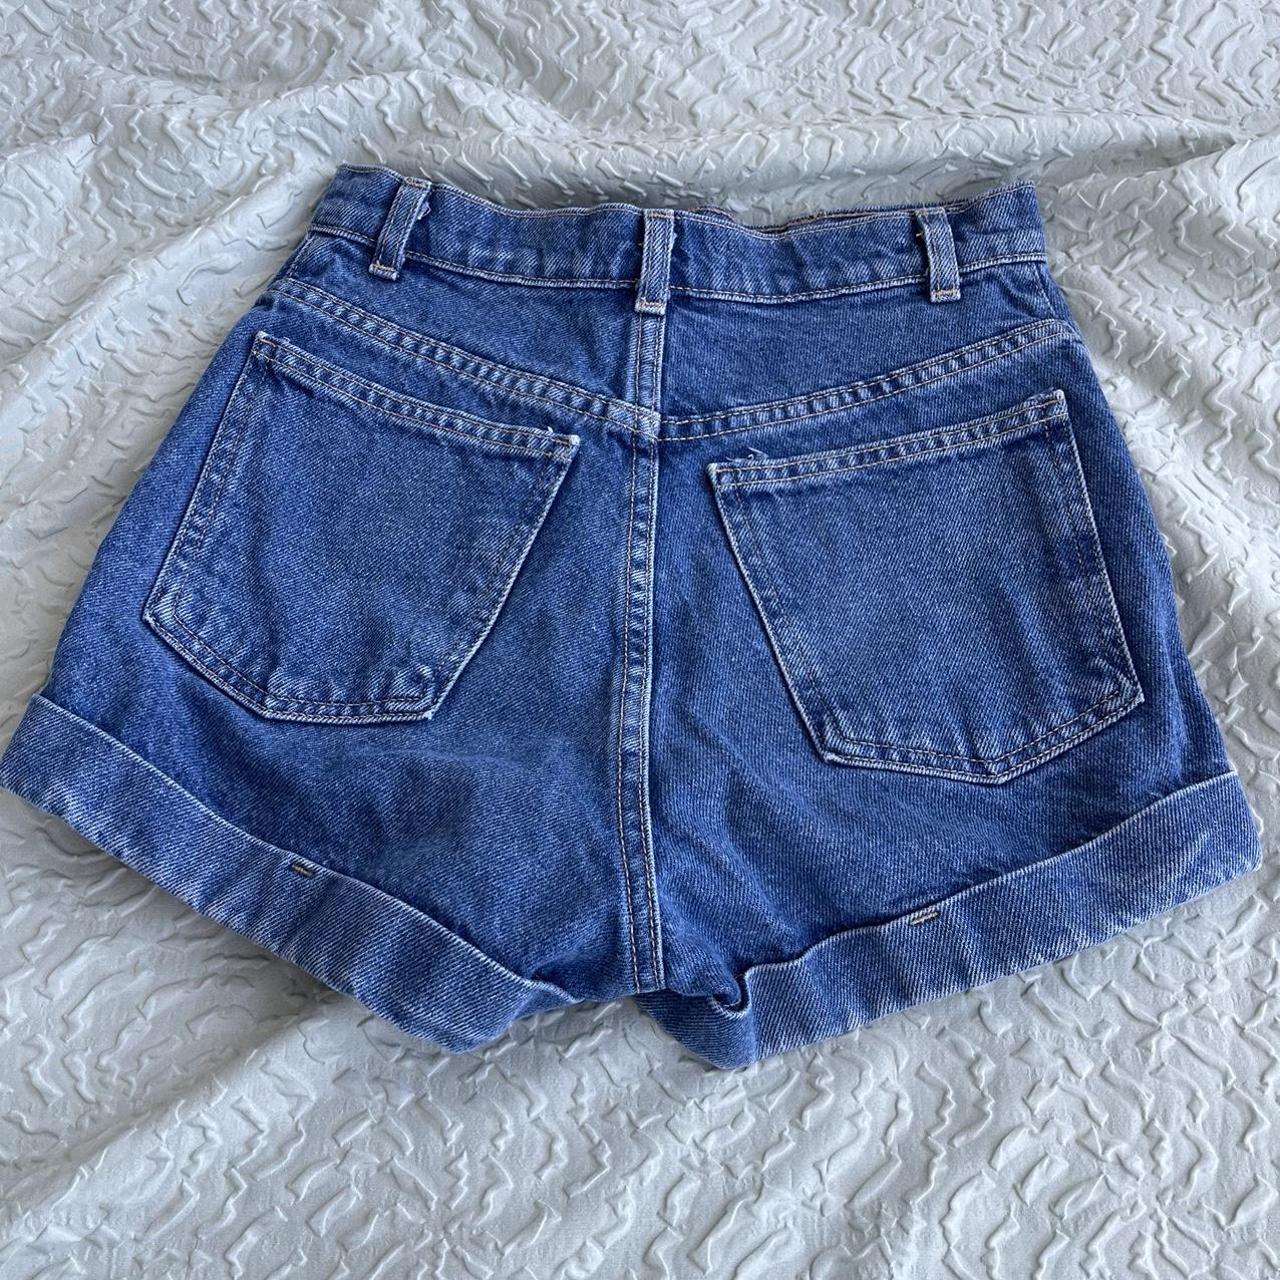 American Apparel Women's Blue Shorts (4)